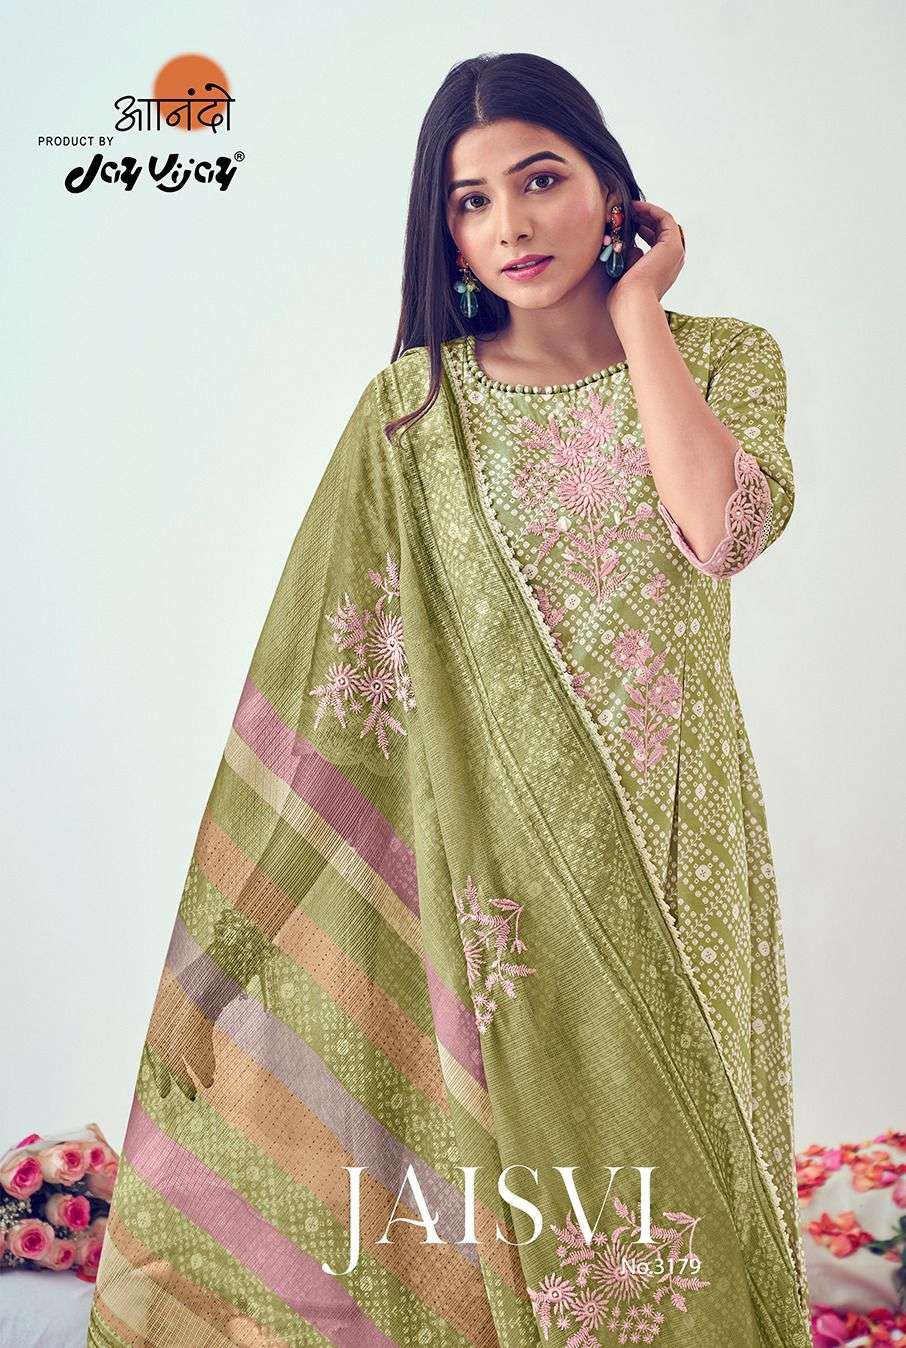 Jay Vijay Aanando Jaisvi 3179 Pure Cotton Stylish Cotton Dress Catalog Dealers